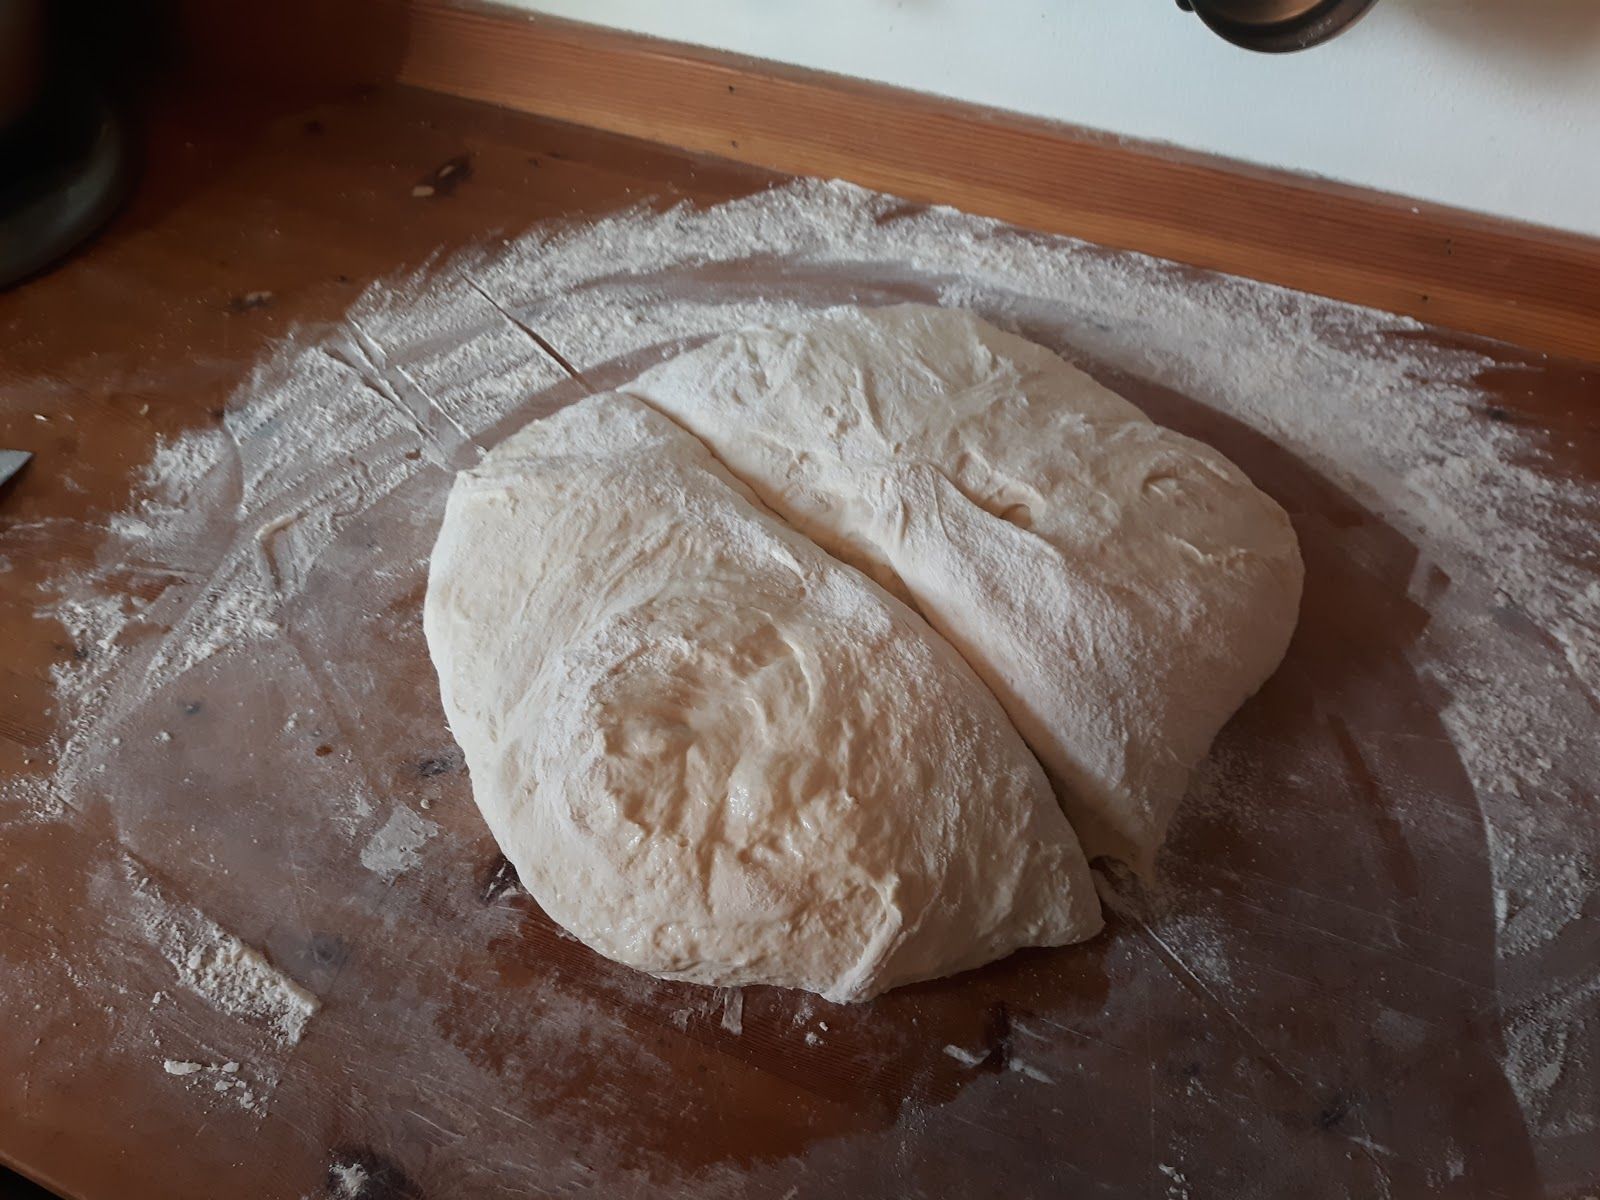 instructions on how to make homemade bread - Bozeman, Montana